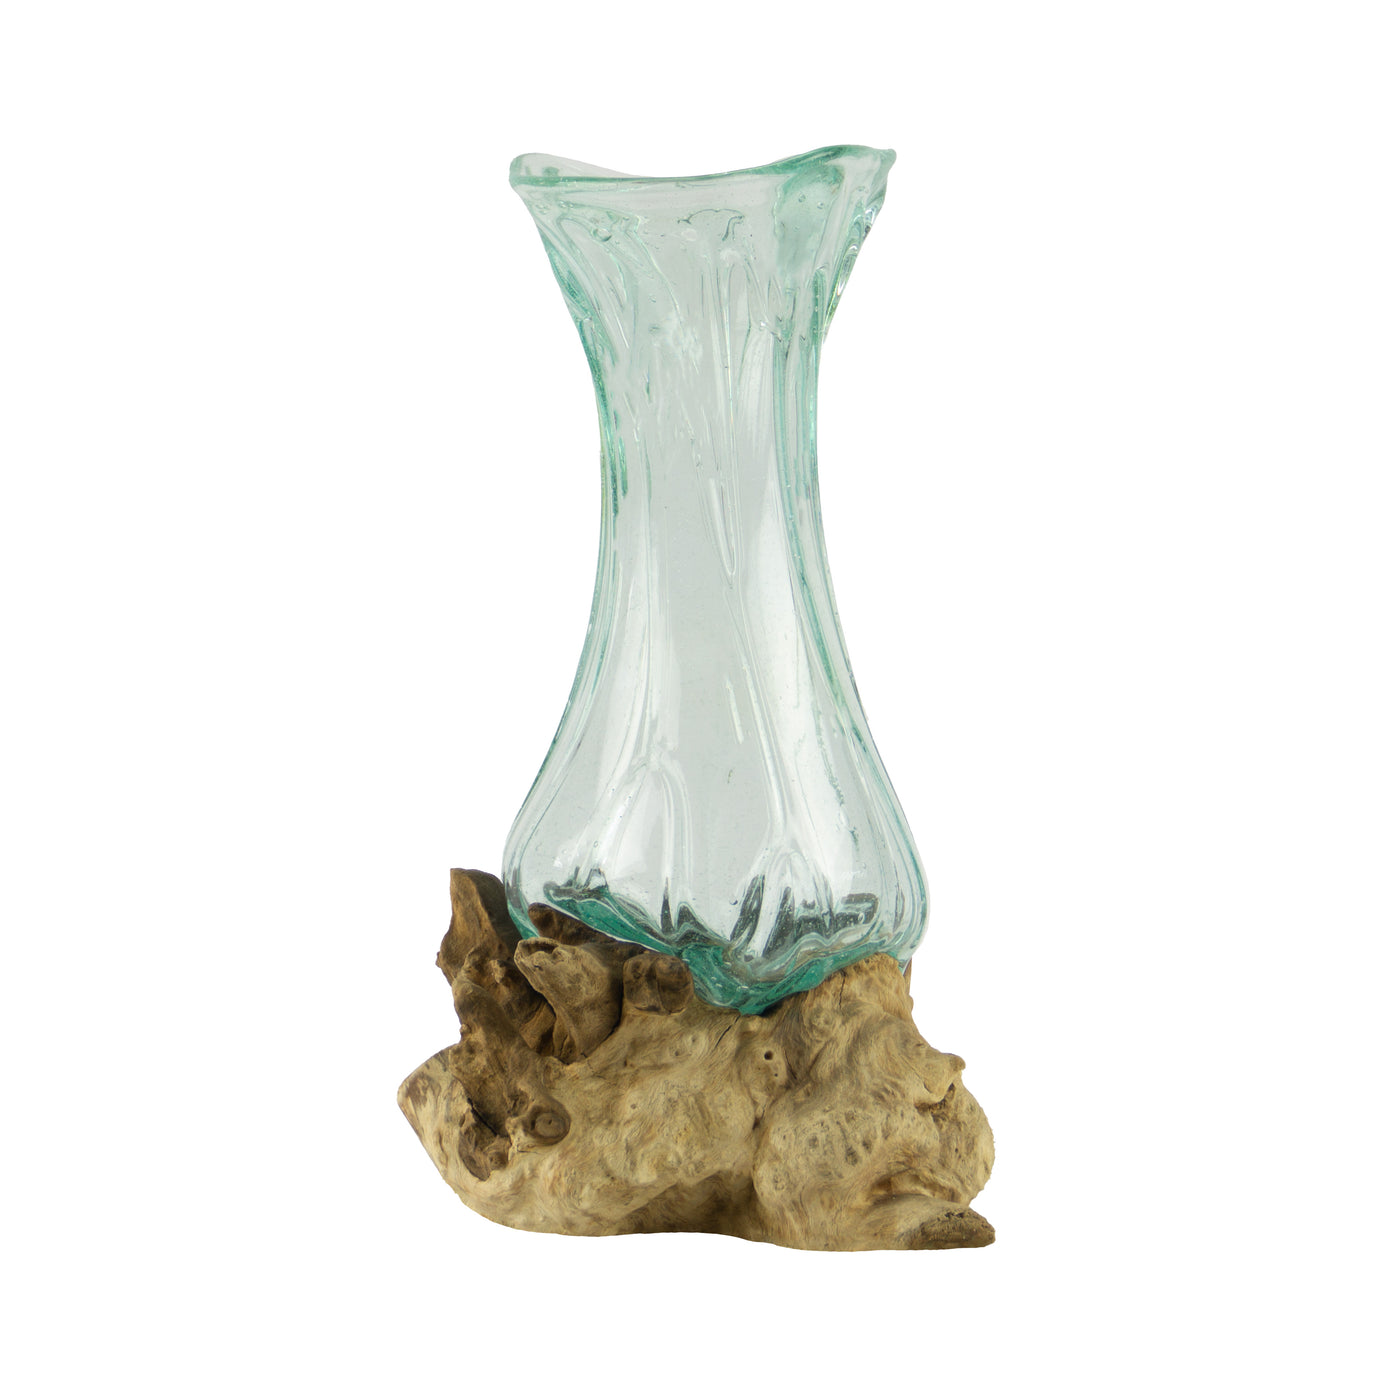 Bali Drift Wood Glass Vase